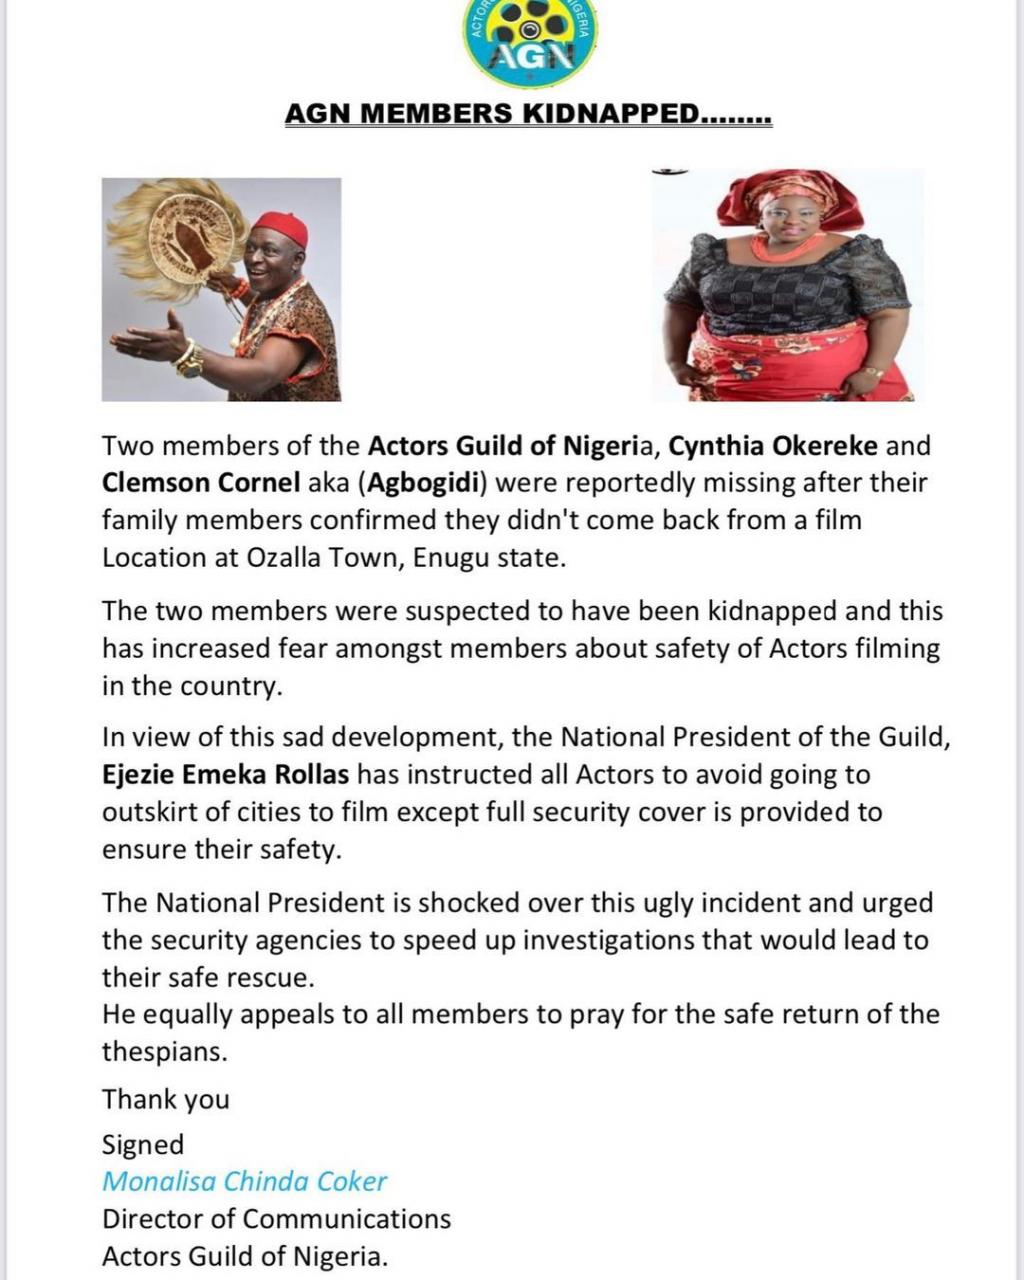 Actors Cynthia Okereke and Clemson Cornel kidnapped